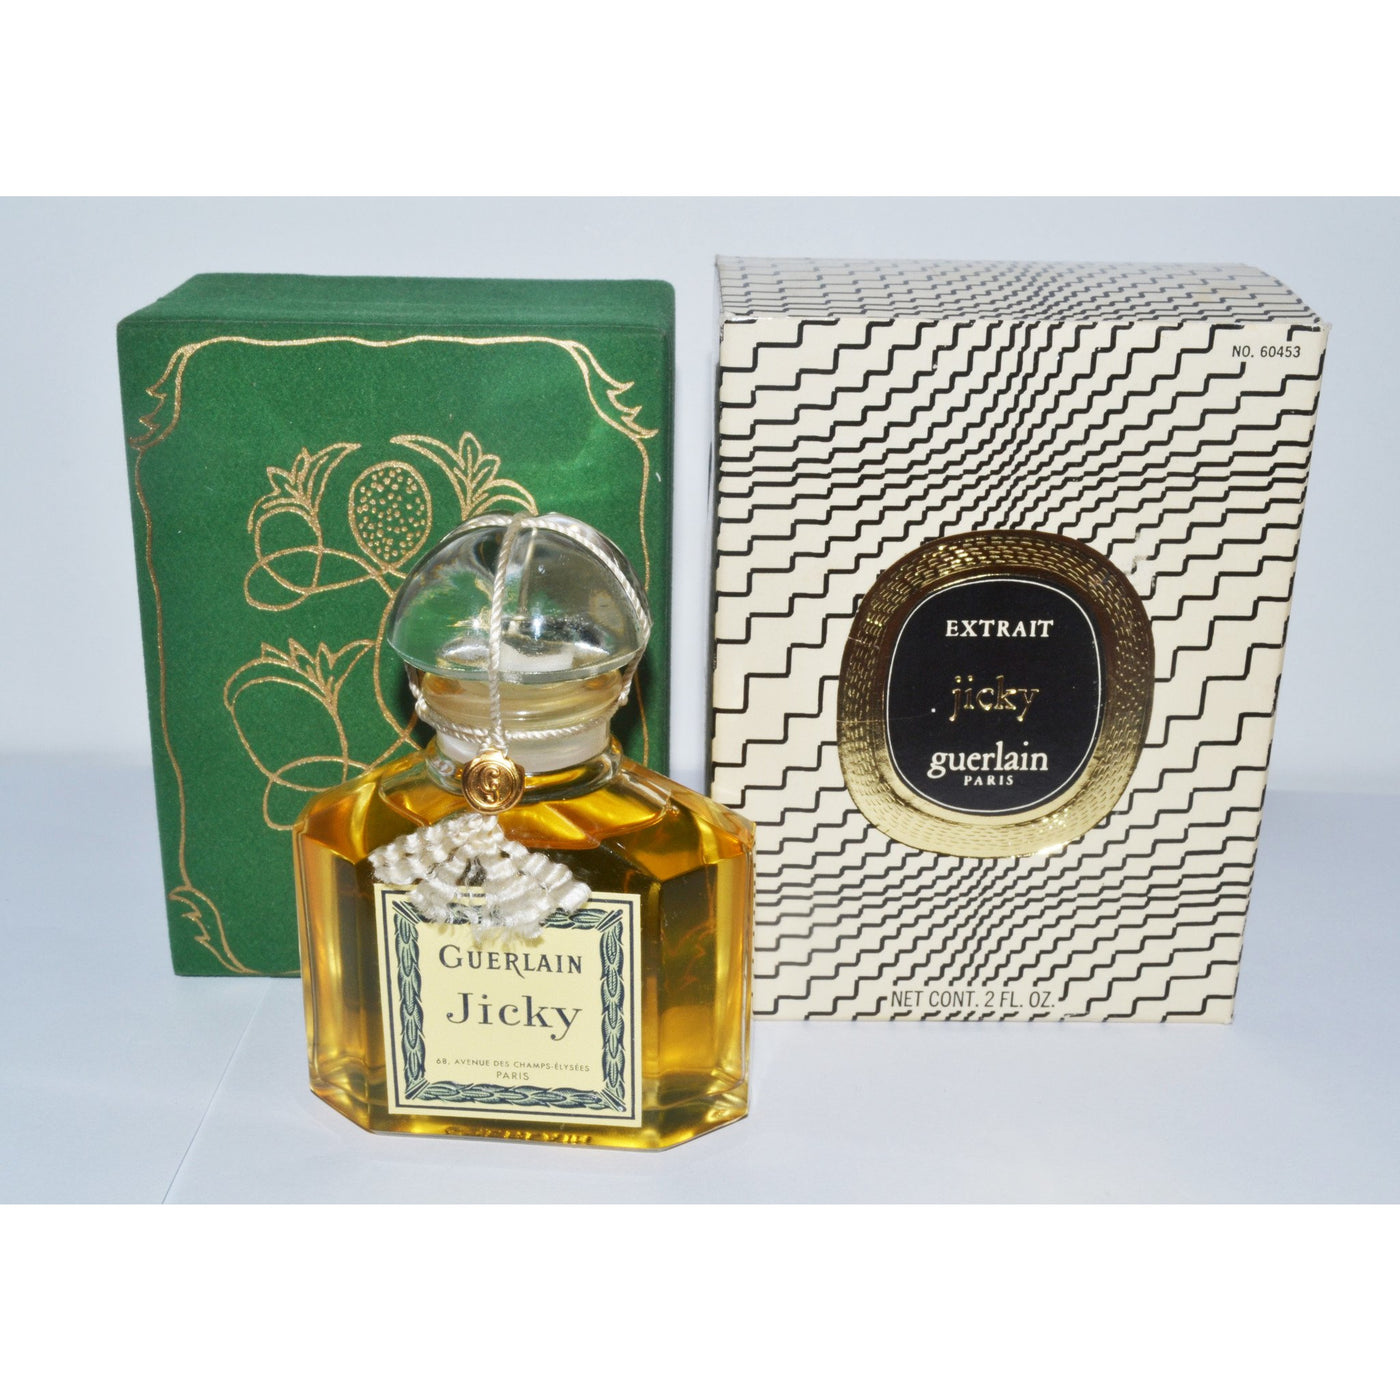 1967 Guerlain Jicky Perfume Extrait